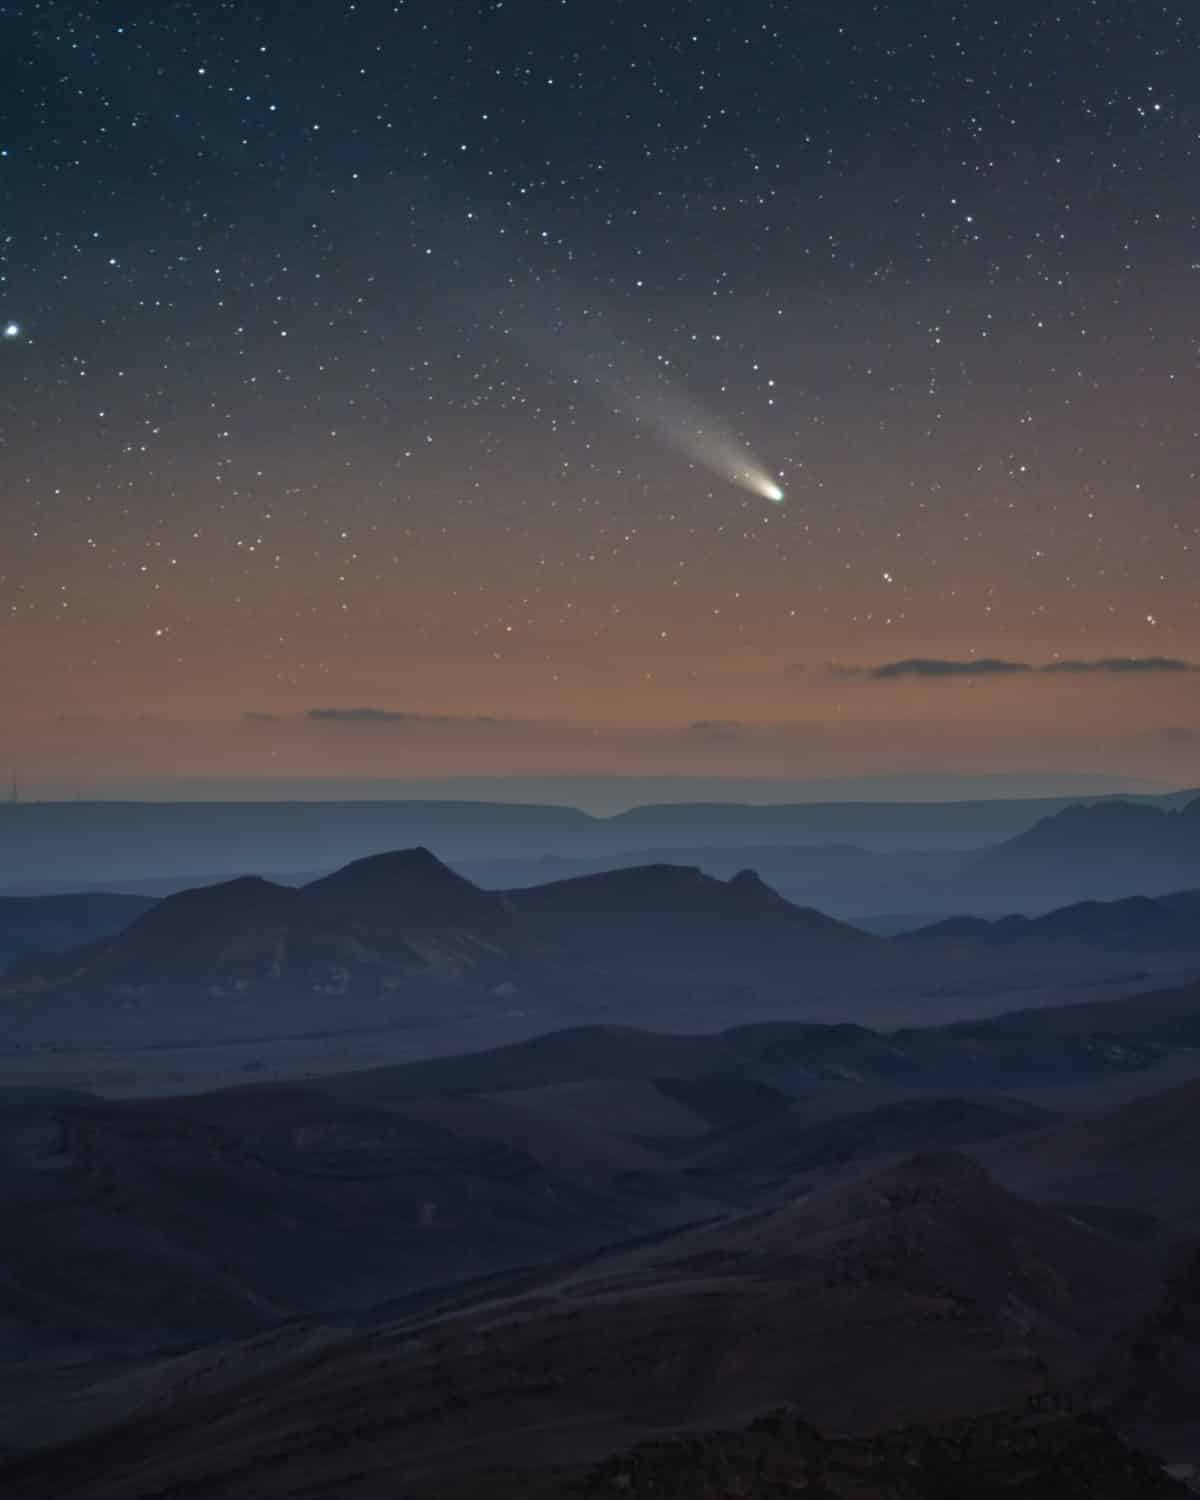 C/2021 A1 (Comet Leonard) captured over the Negev desert, Israel